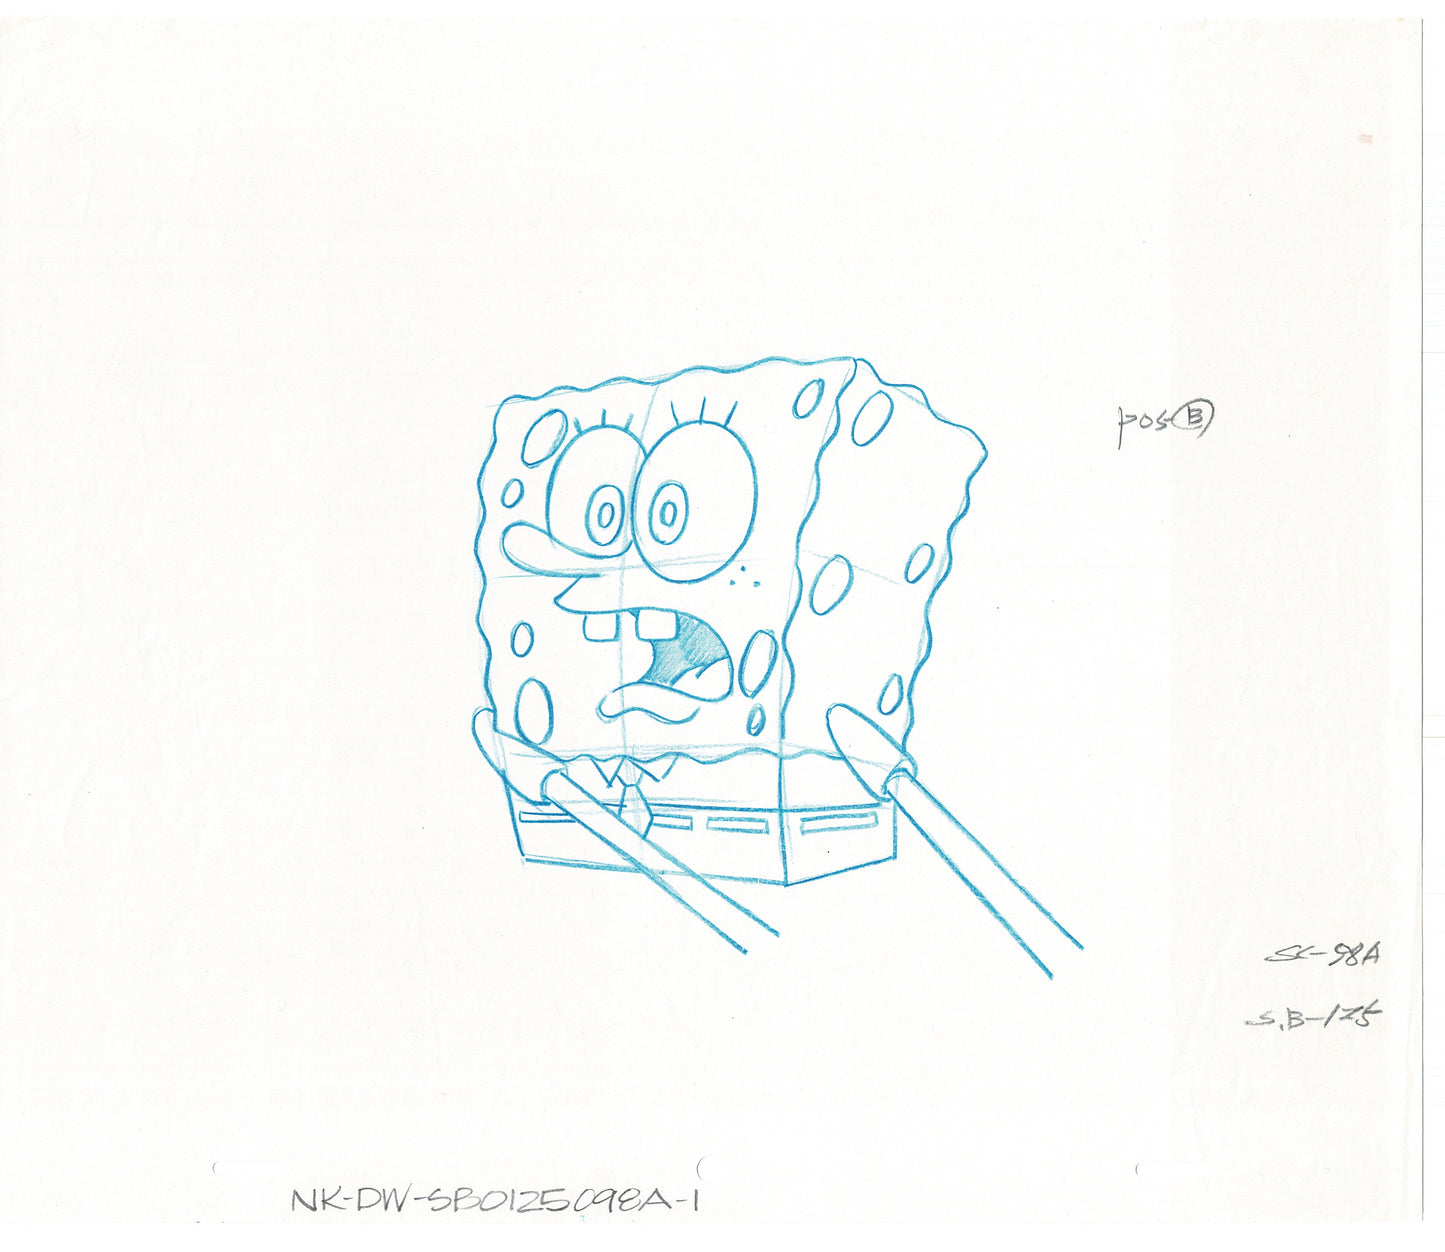 Spongebob Squarepants Production Animation Cel Drawing Nickelodeon 1999-2014 A-5